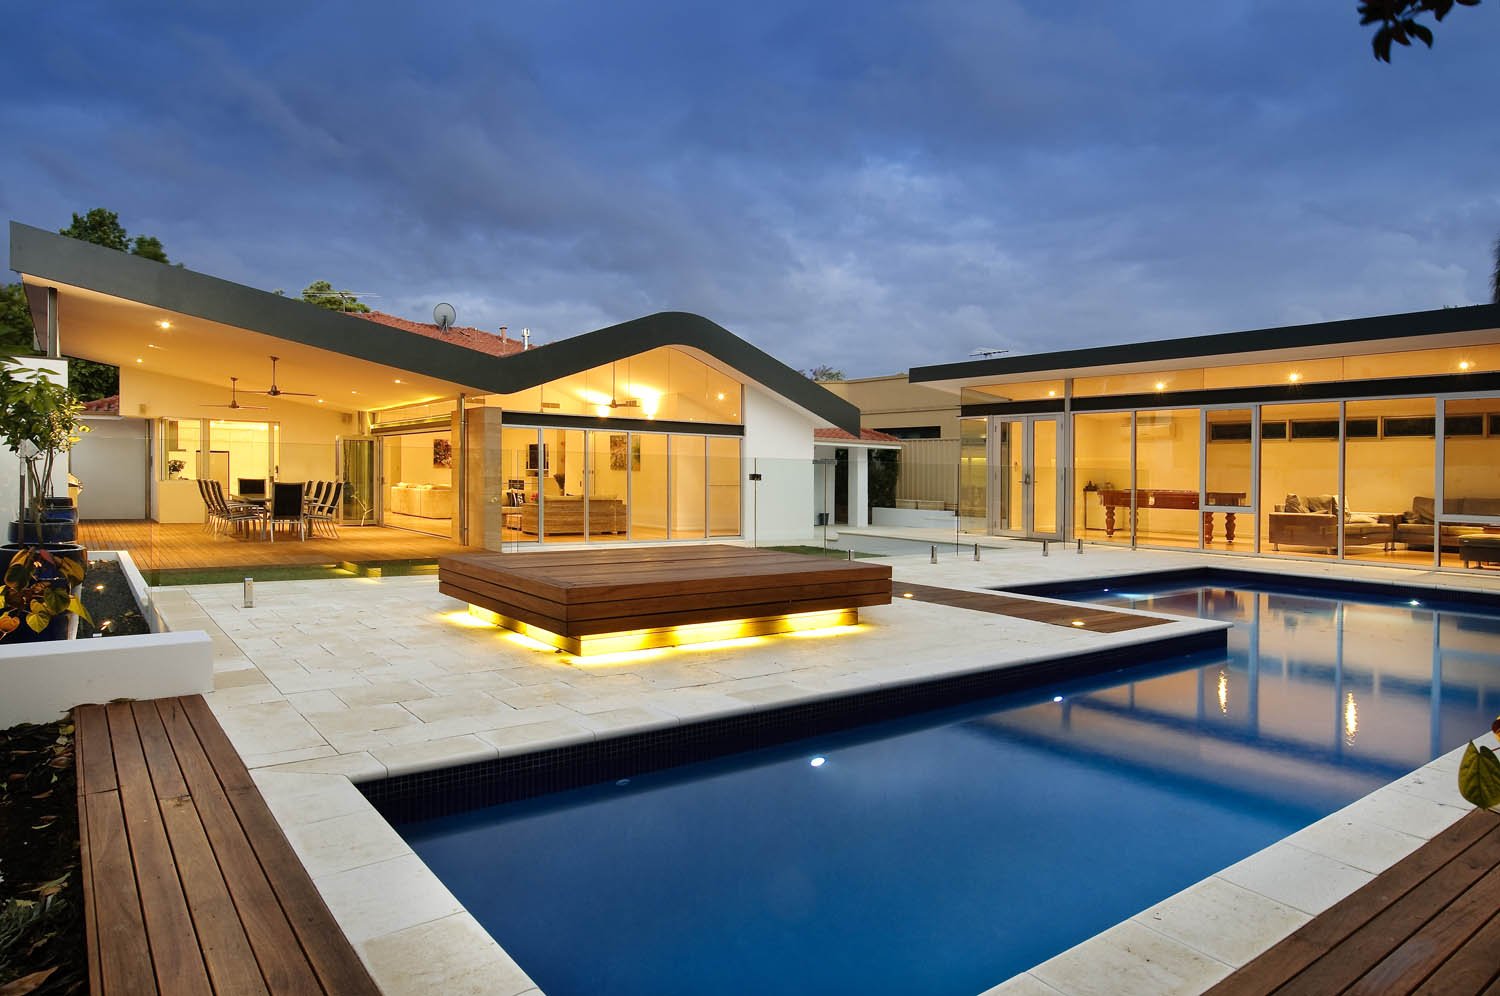 applecross-residence-perth-building-residential-design-architecture-exterior-designer-pool-landscaping-backyard.jpg